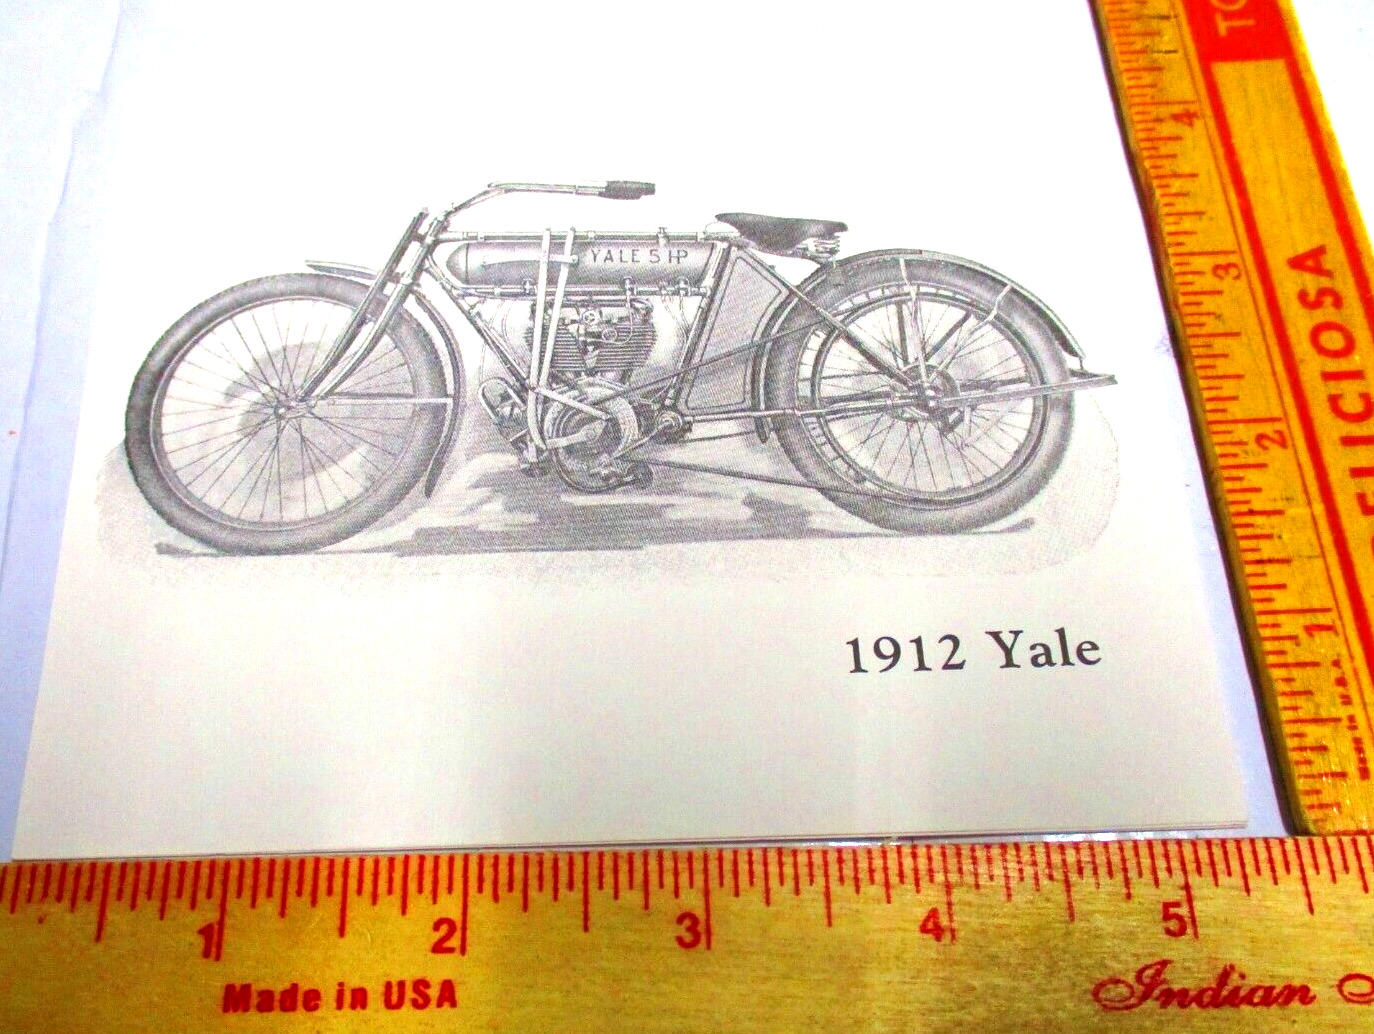 1912 Yale note card vintage collectible old motorcycle postcard memorabilia